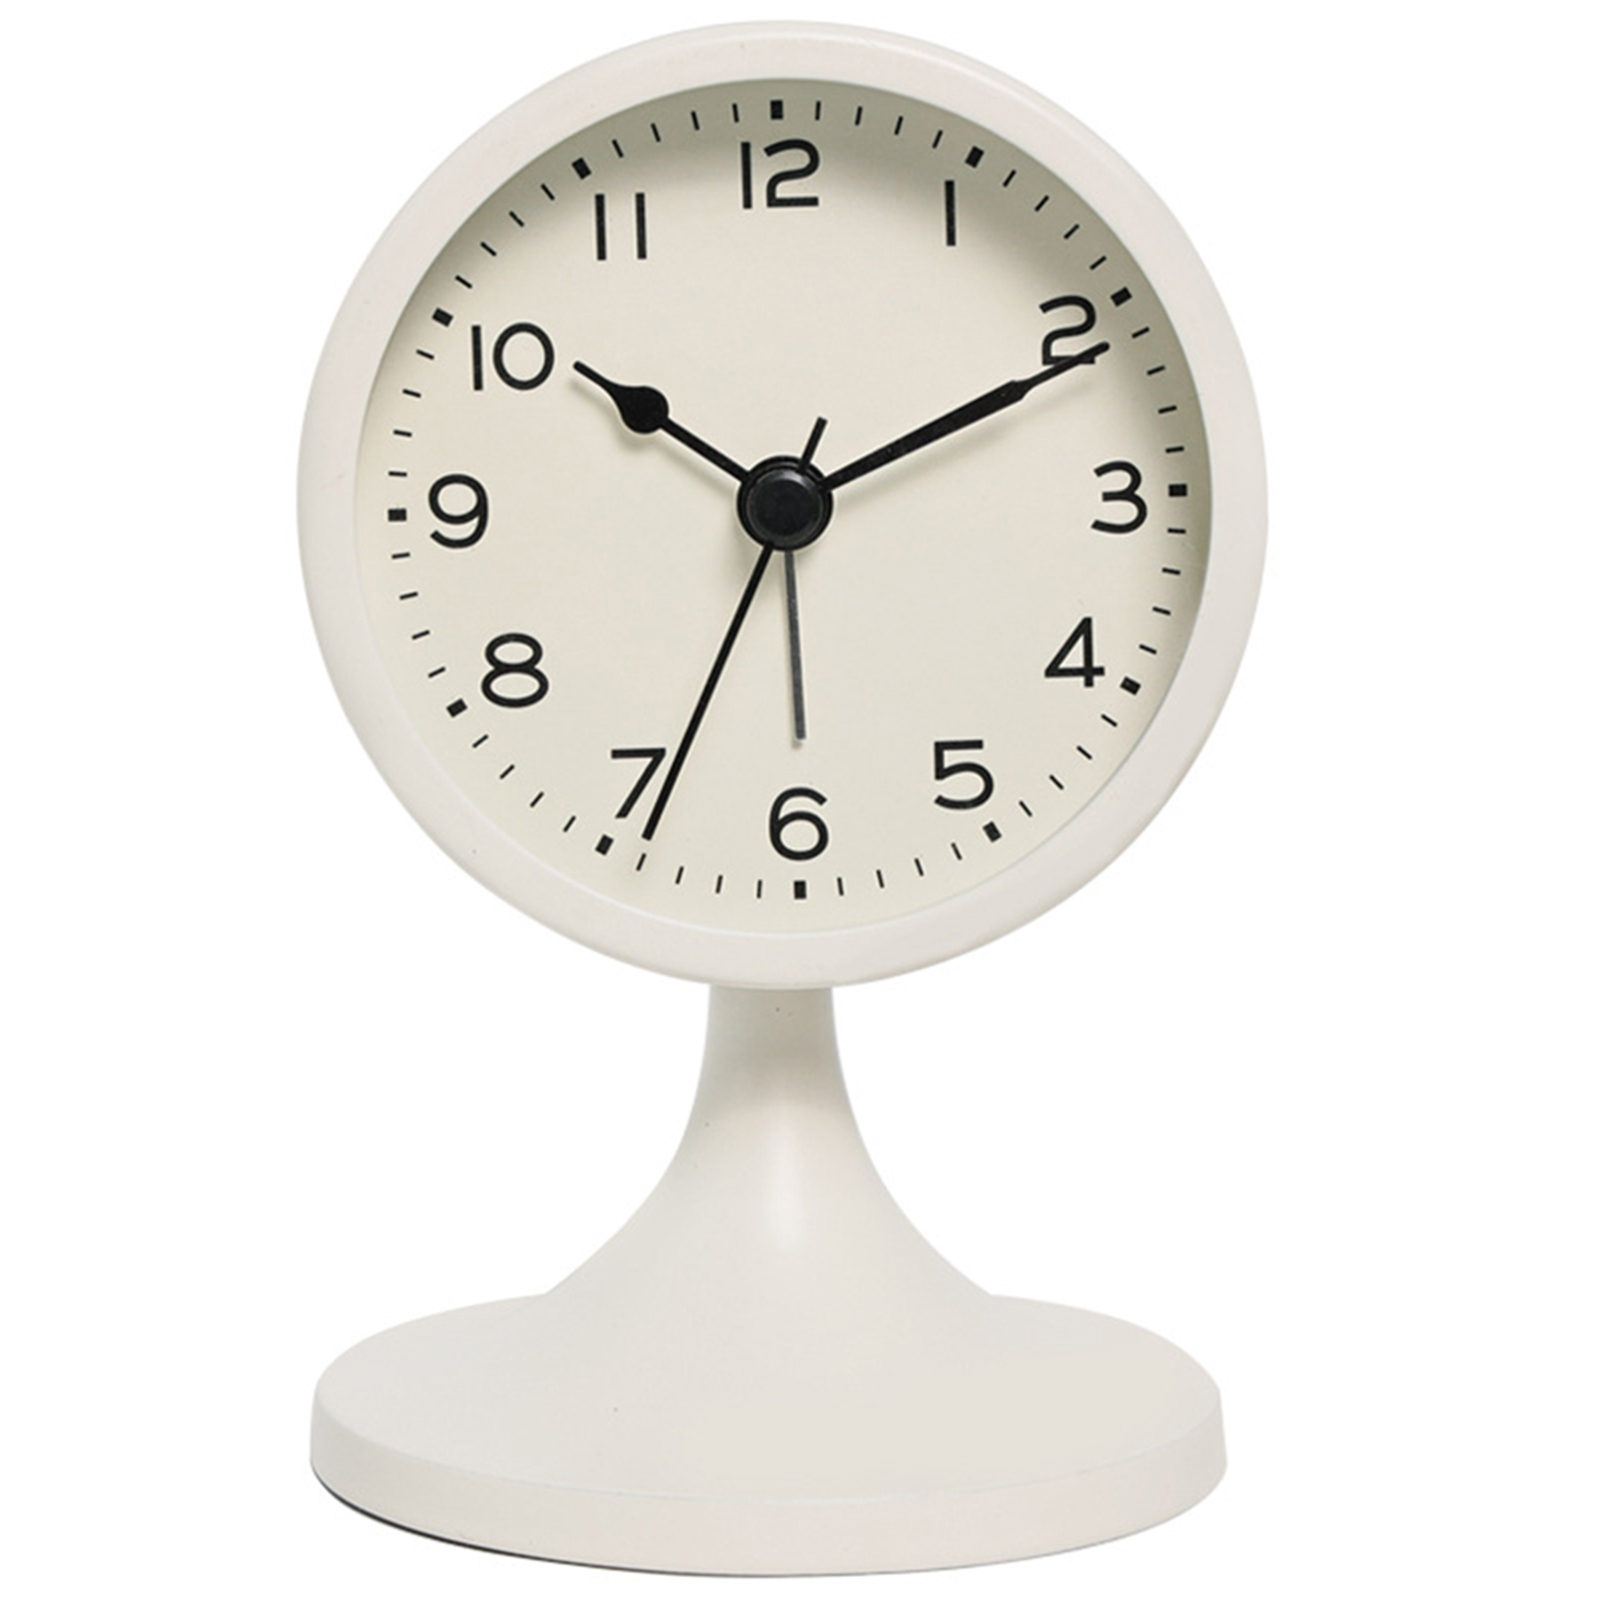 Vintage Alarm Clock High Precision Silent Bedside Night Light Loud Alarm Clock For Bedroom Home Office Decor